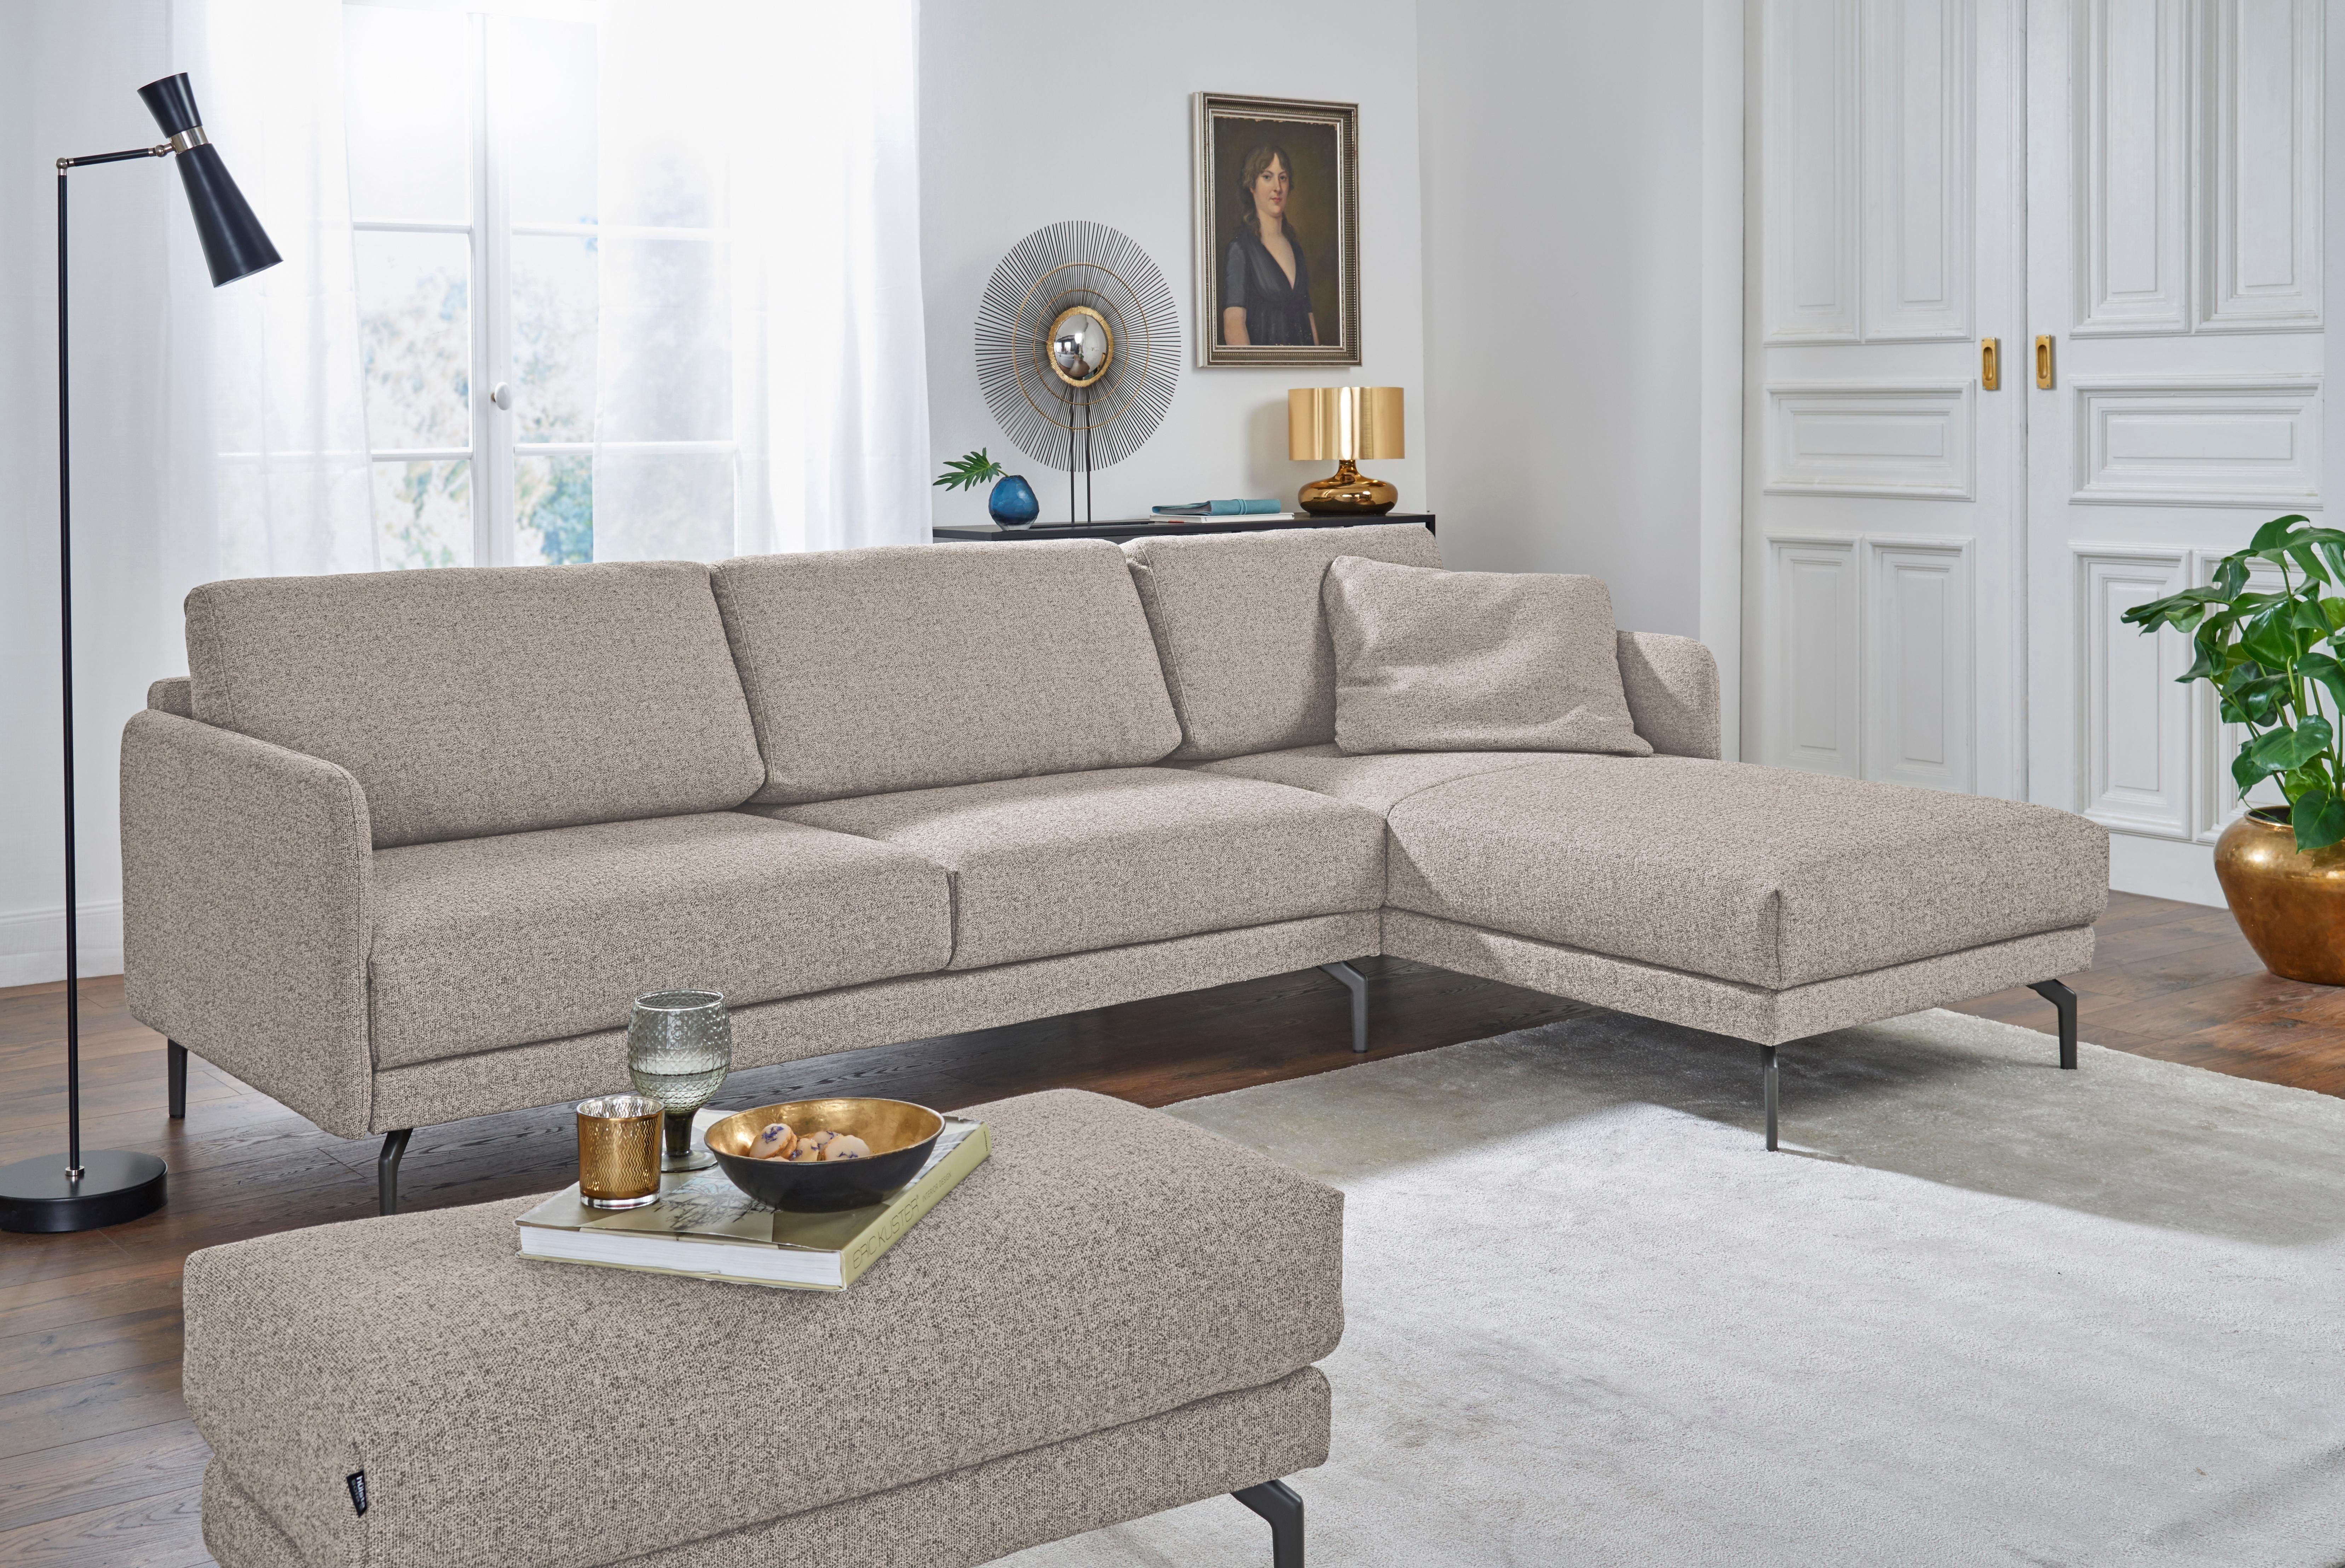 hülsta sofa Ecksofa hs.450, Breite in sehr schmal, umbragrau Armlehne 234 cm, Alugussfüße